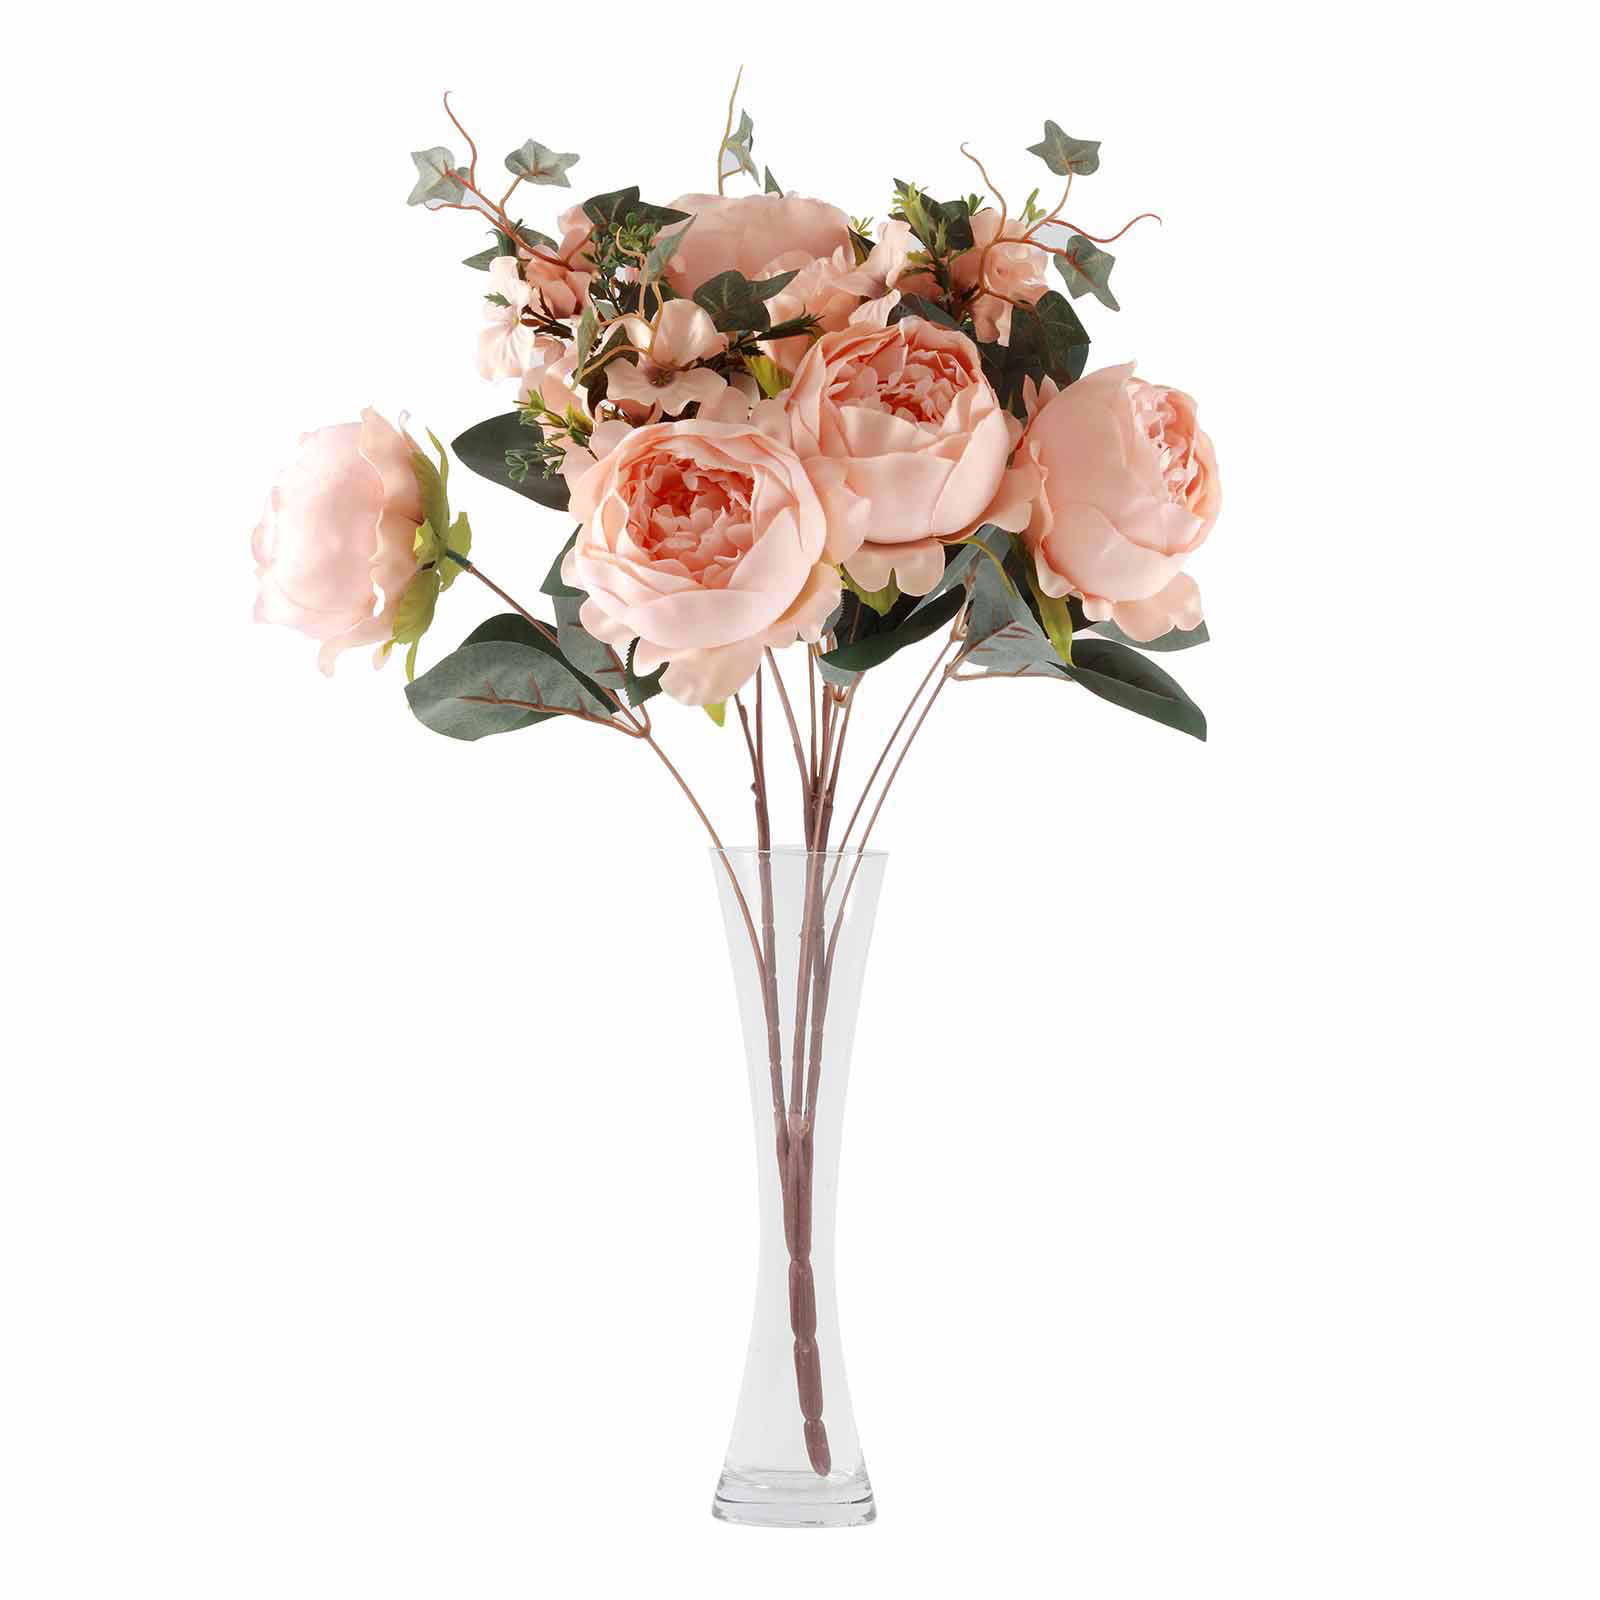 Balsacircle 12 Silk Peonies With Rose Buds And Hydrangea Flowers 2 Bushes Party Wedding Arrangements Centerpieces Bouquets Walmart Com Walmart Com